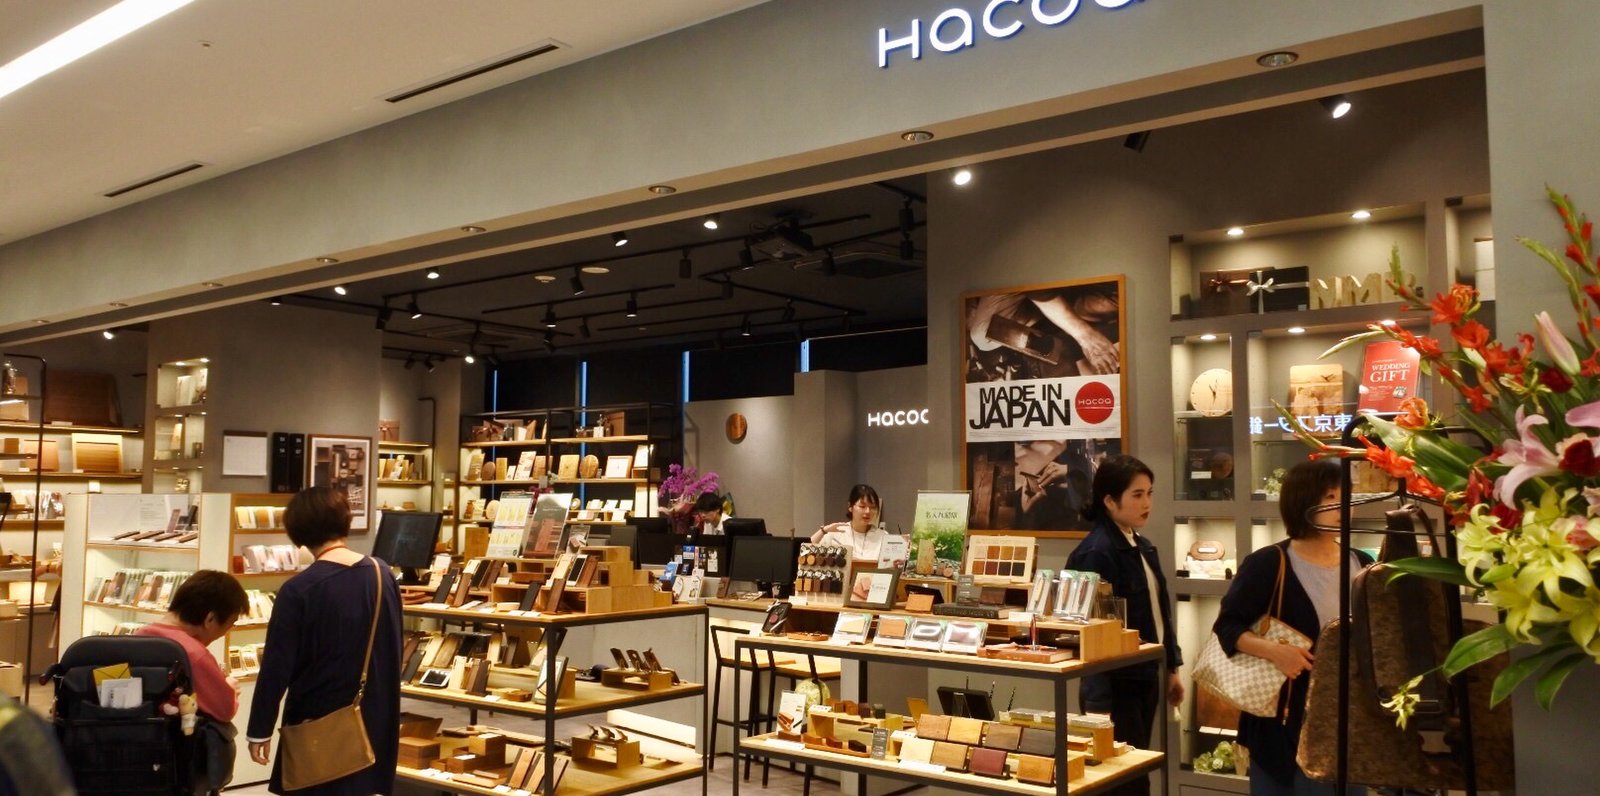 Hacoa Direct Store